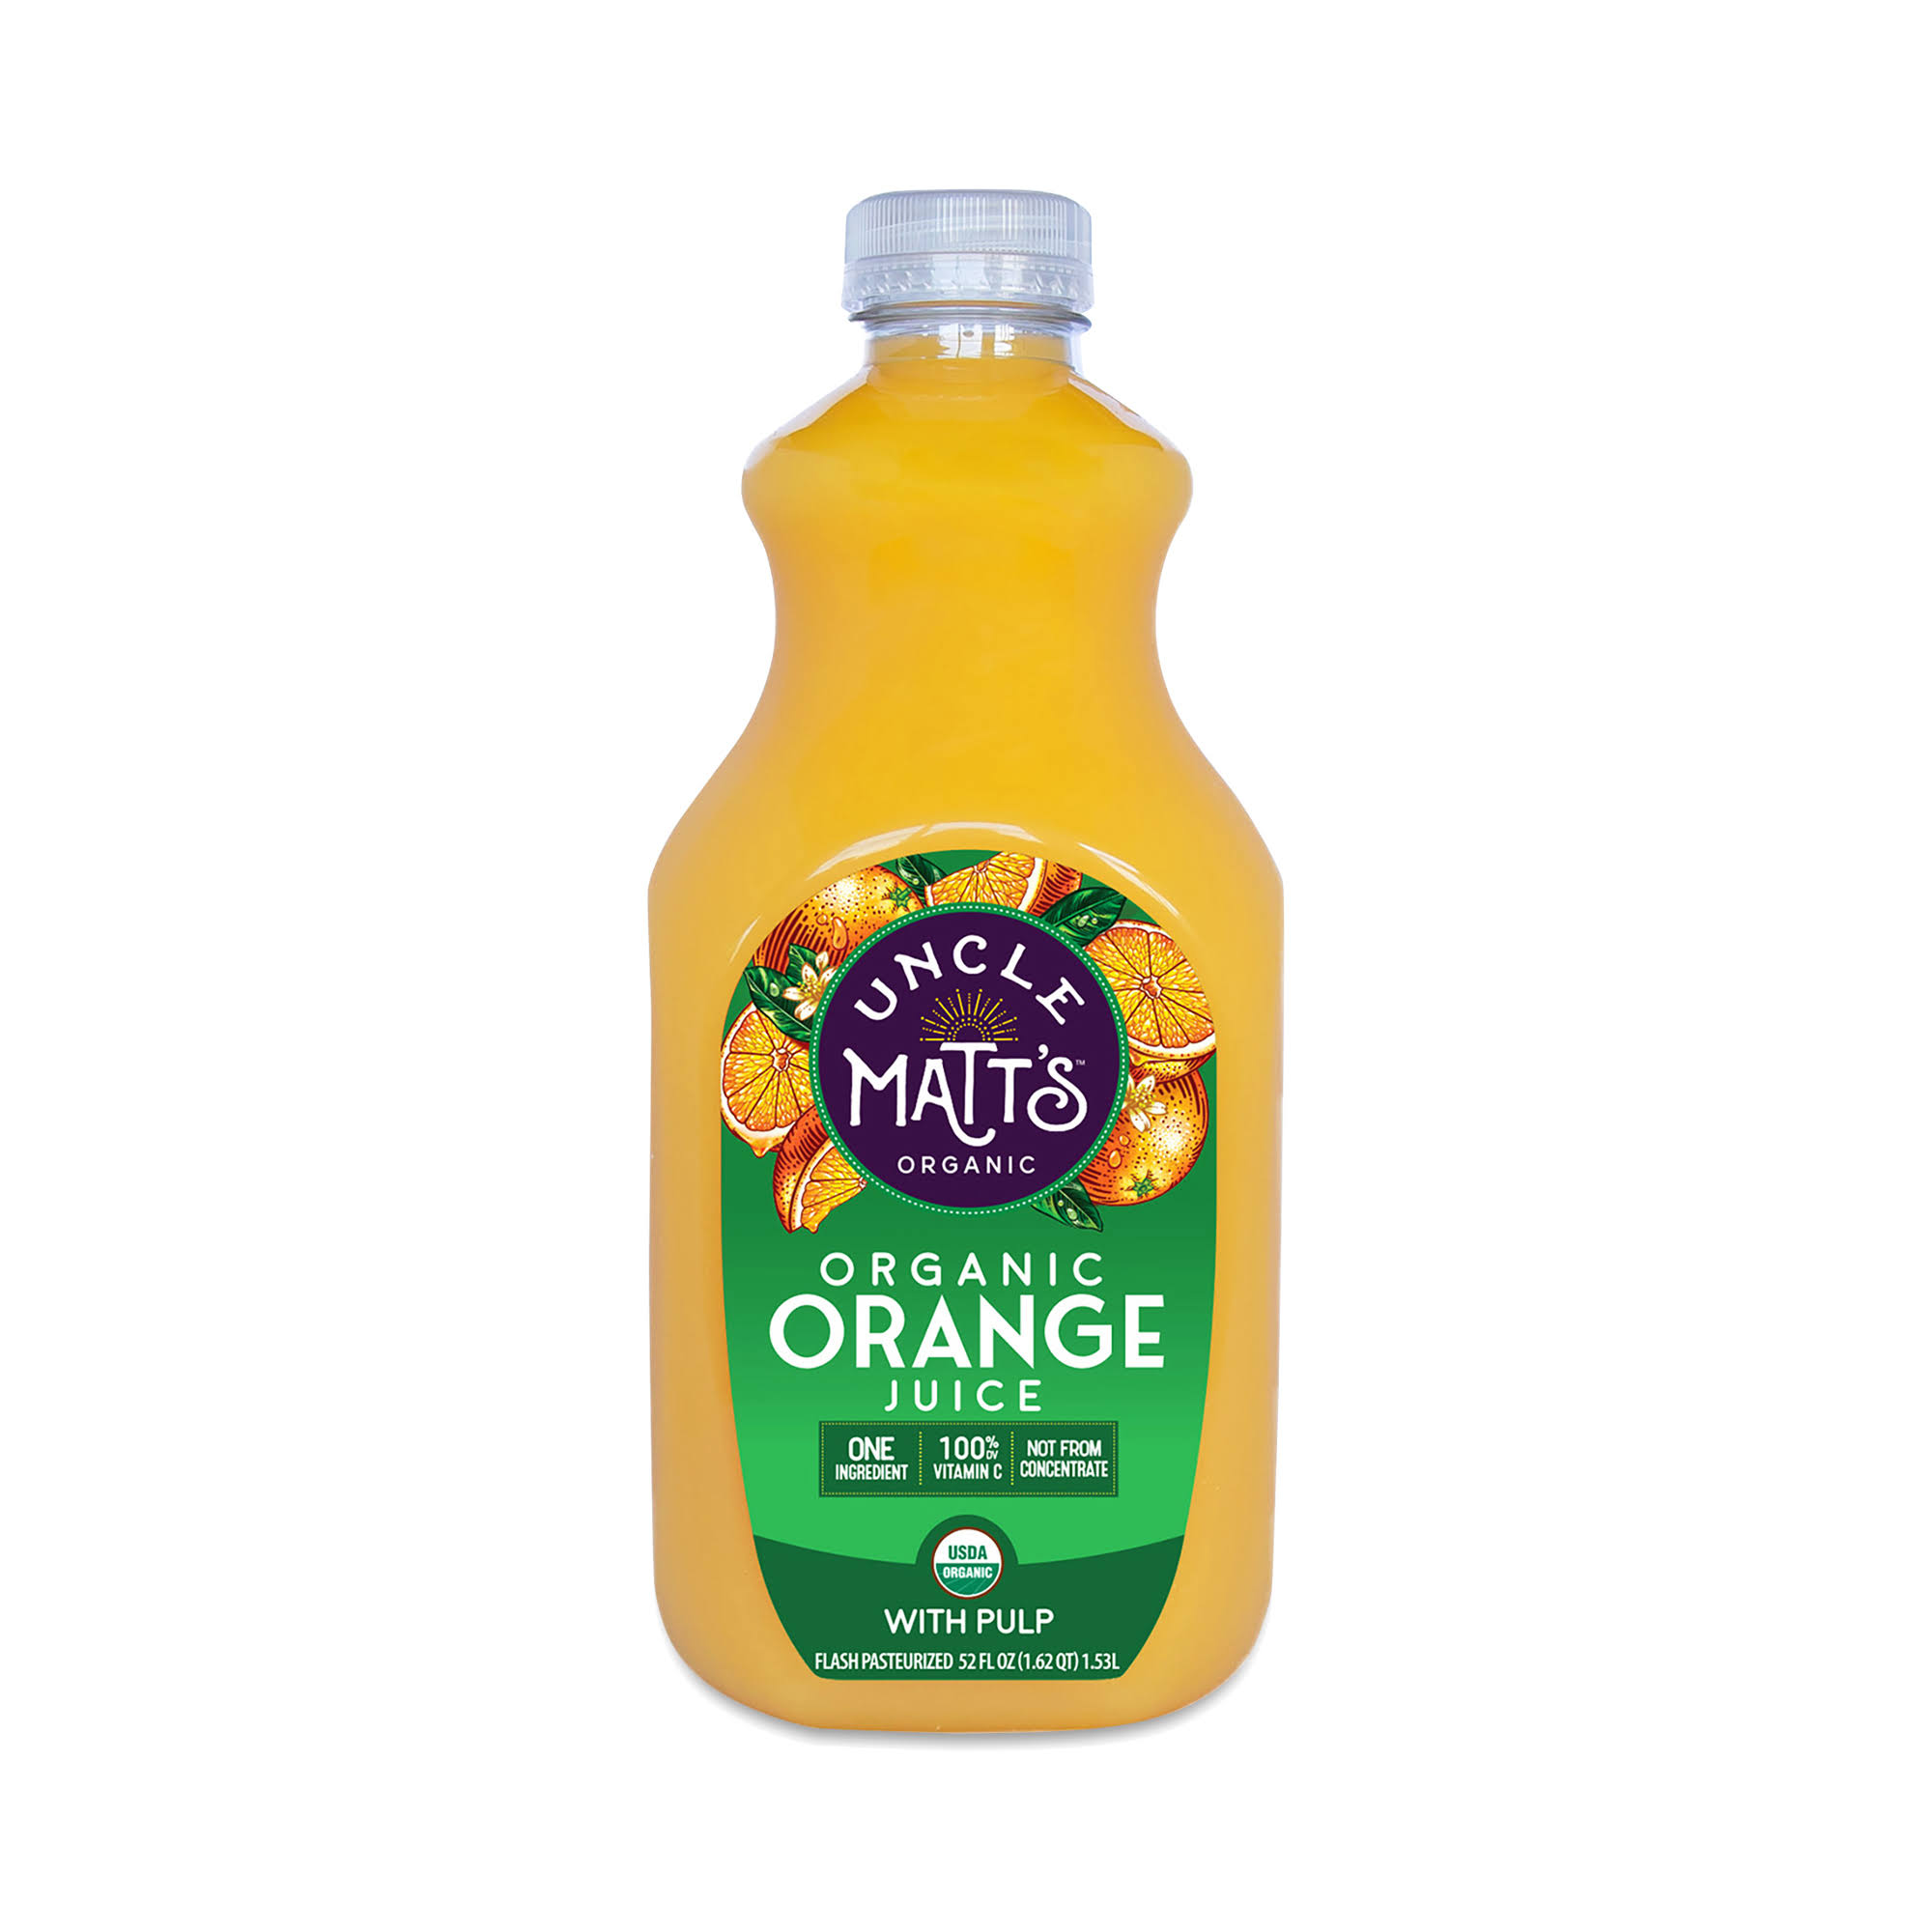 Uncle Matt's Orange Juice, Organic, with Pulp - 52 fl oz